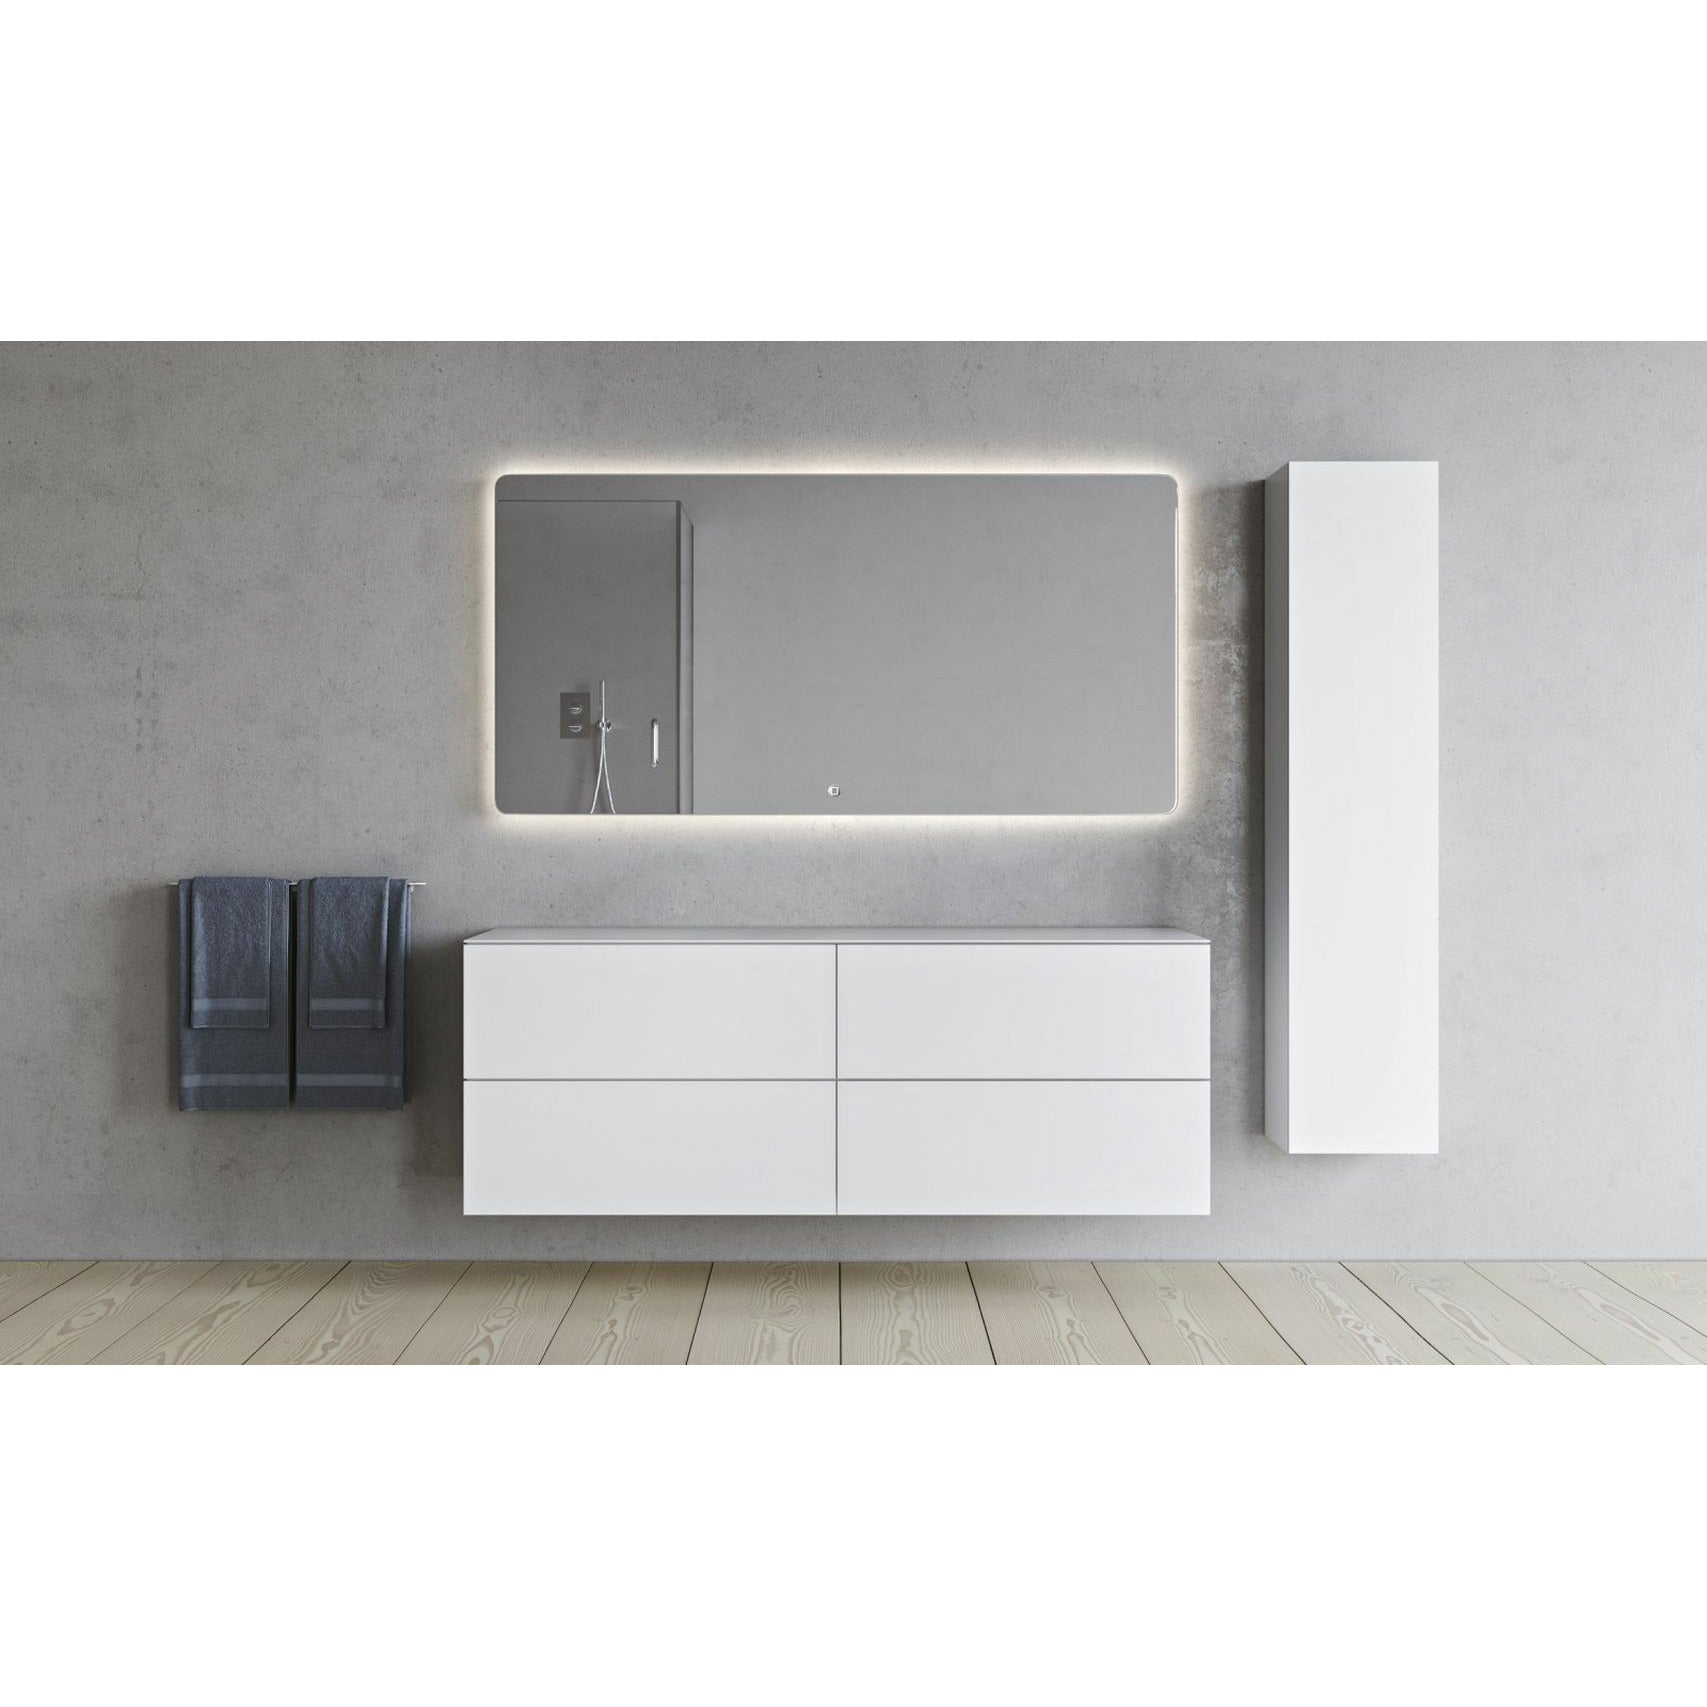 Copenhagen Bath Sq2 Double Cabinet With Countertop, L160 Cm